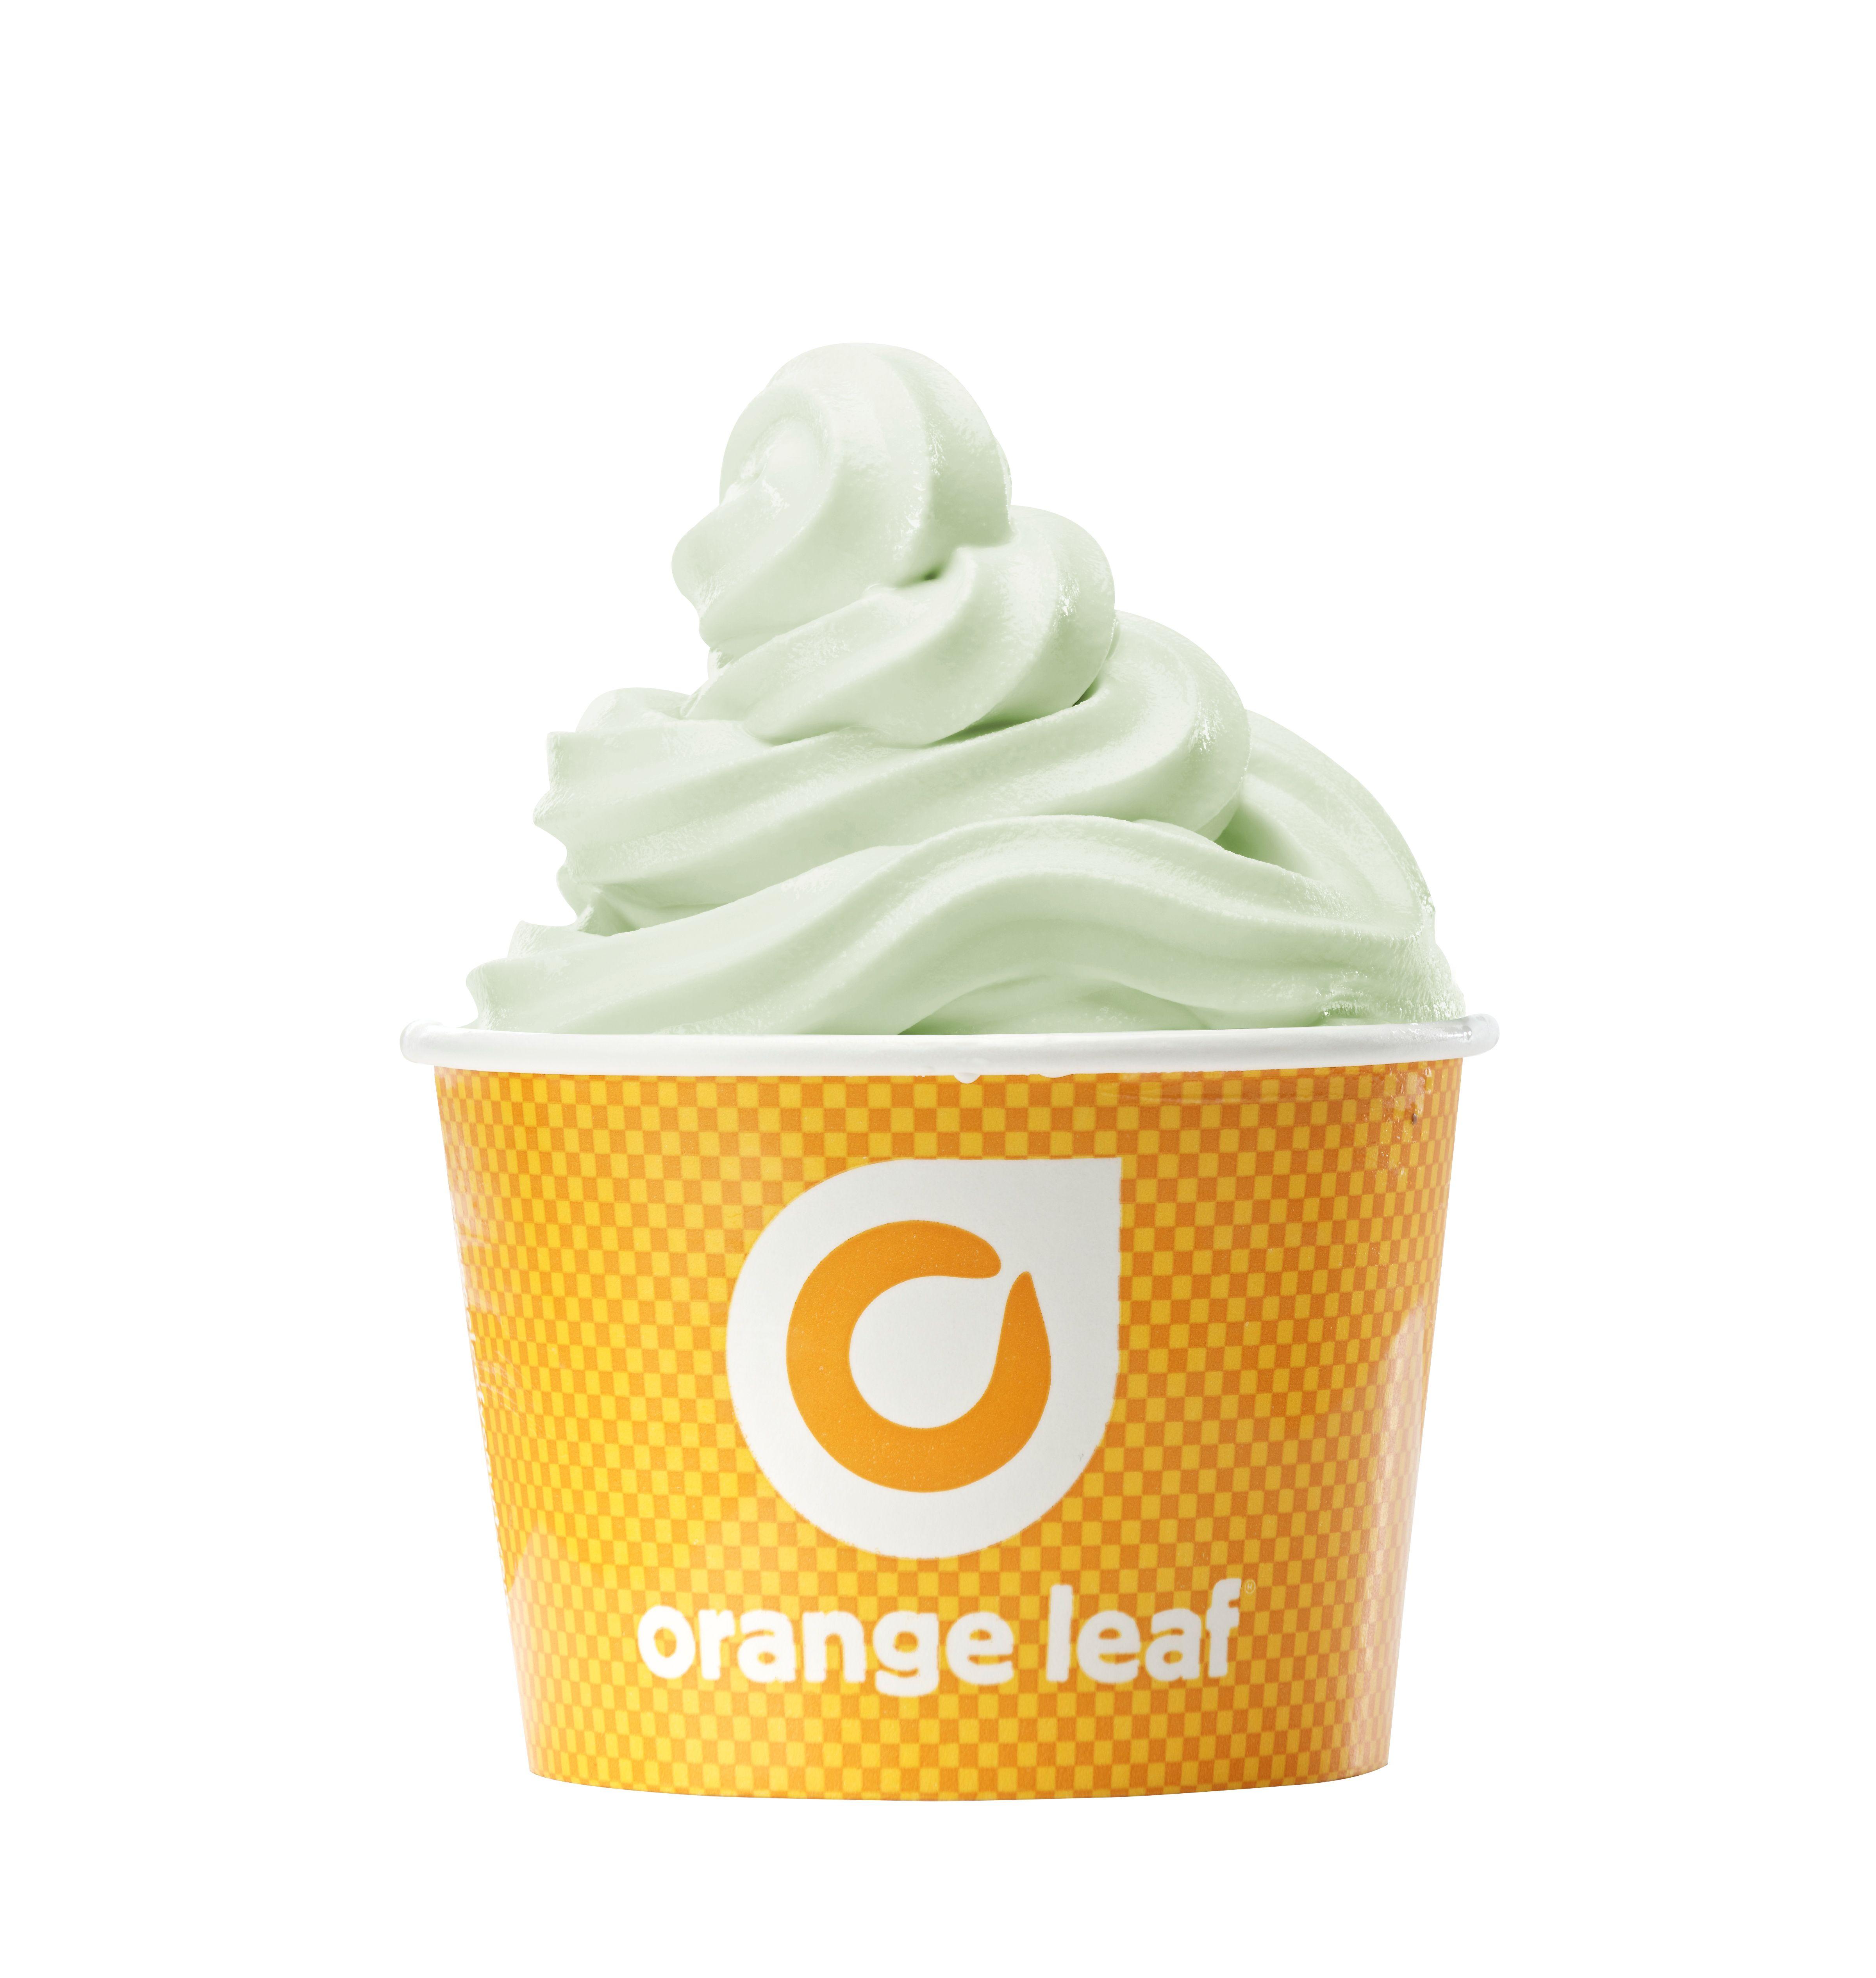 Ice Cream Orange Leaf Logo - New Pistachio Flavor Introduced by Orange Leaf Frozen Yogurt ...